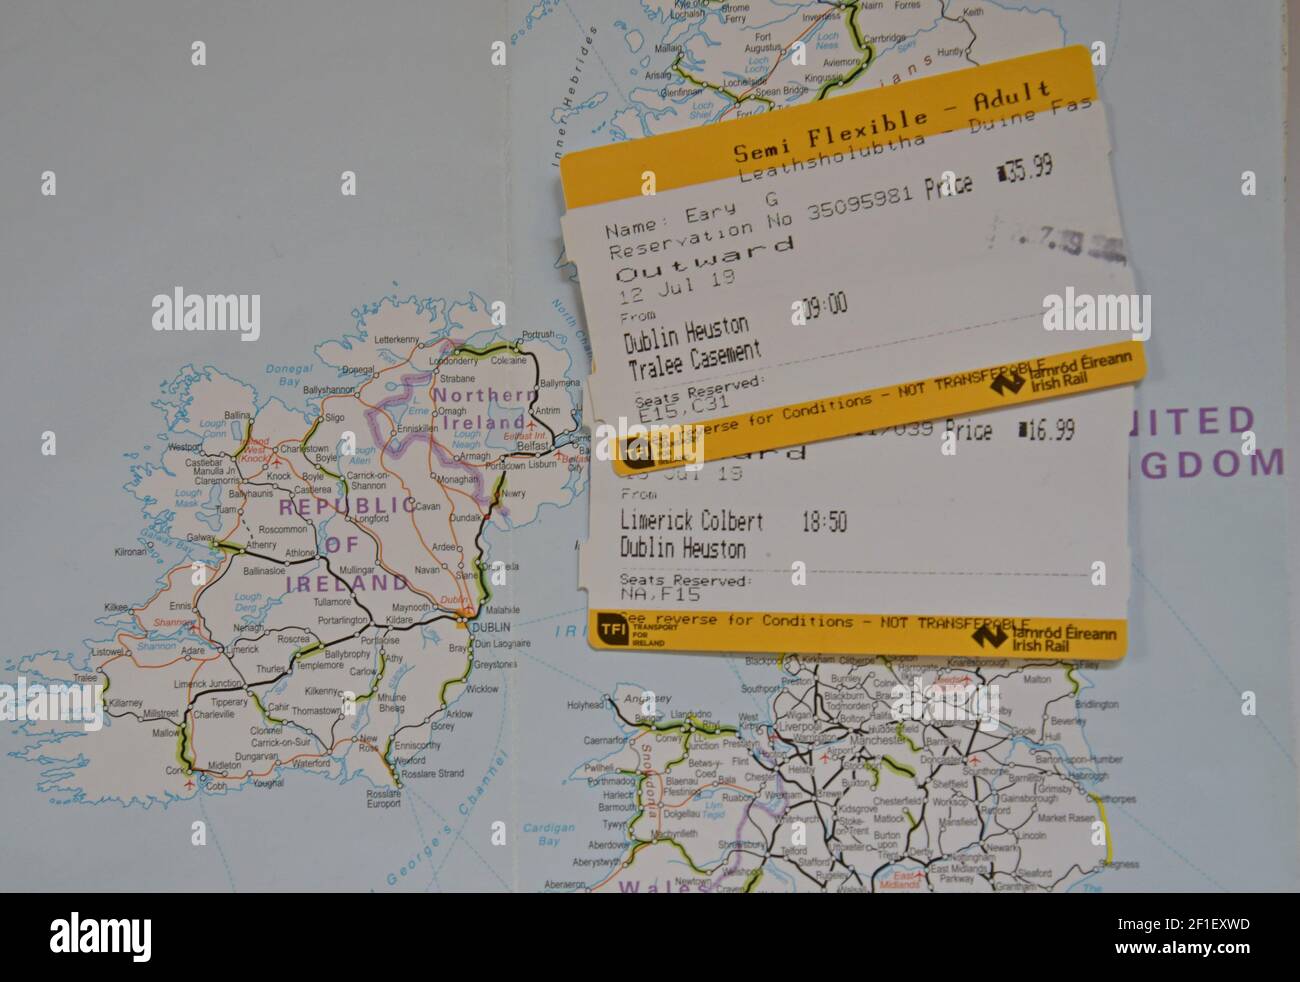 Iarnród Éireann -  Irish Railways - train tickets on a rail map showing Ireland's railways Stock Photo